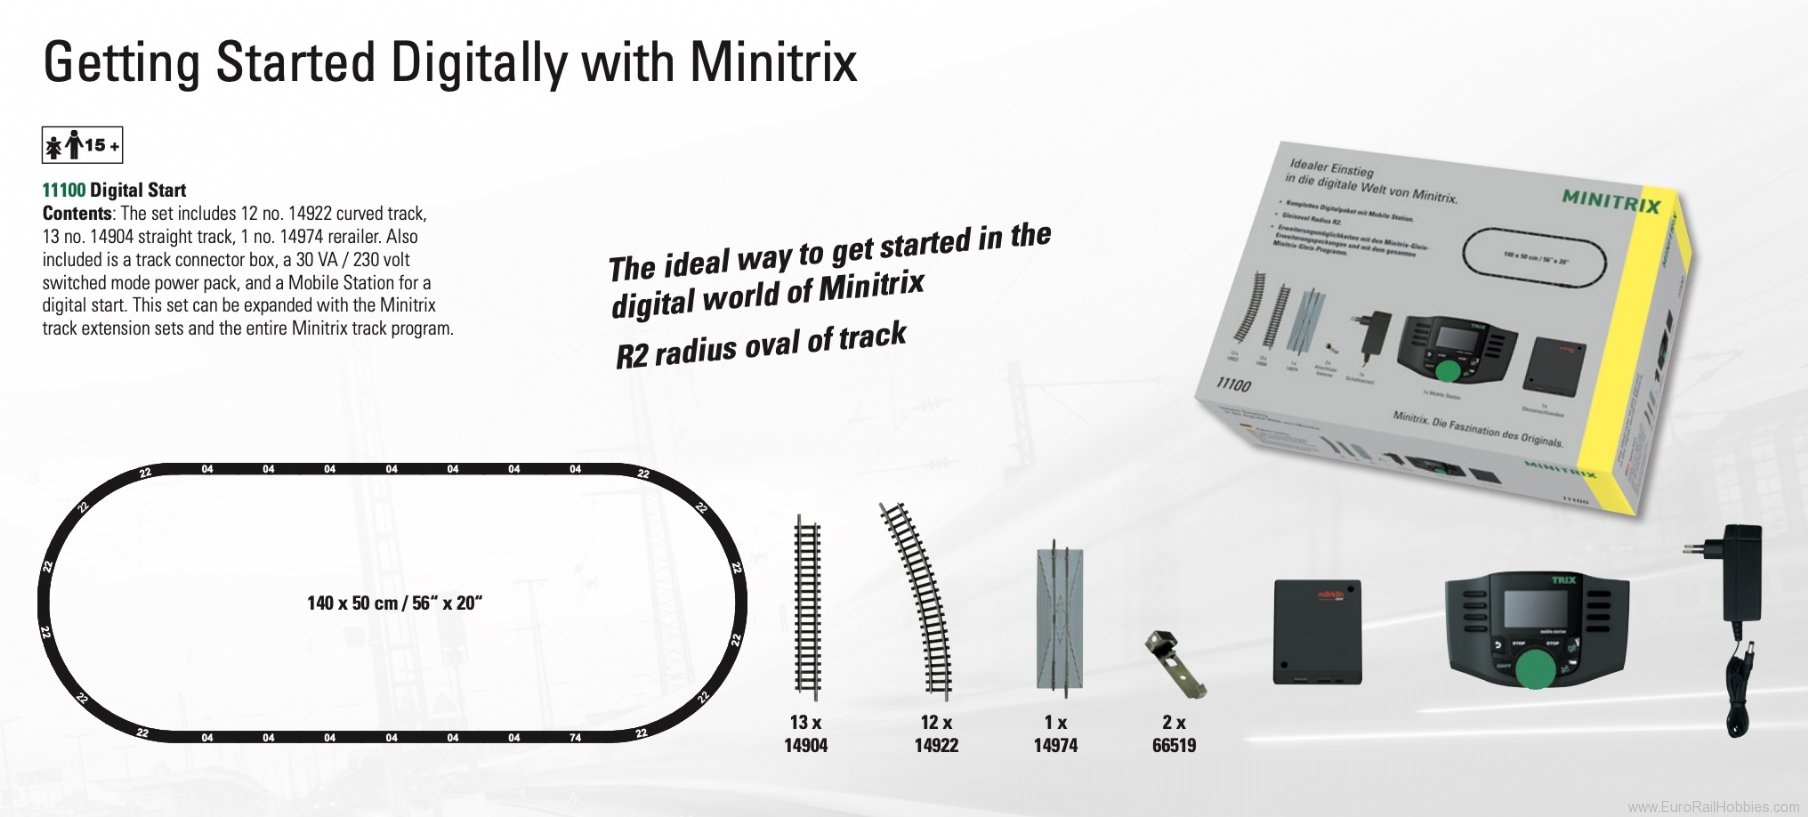 Trix 11100 Digital Start Set - Getting Started with Mini